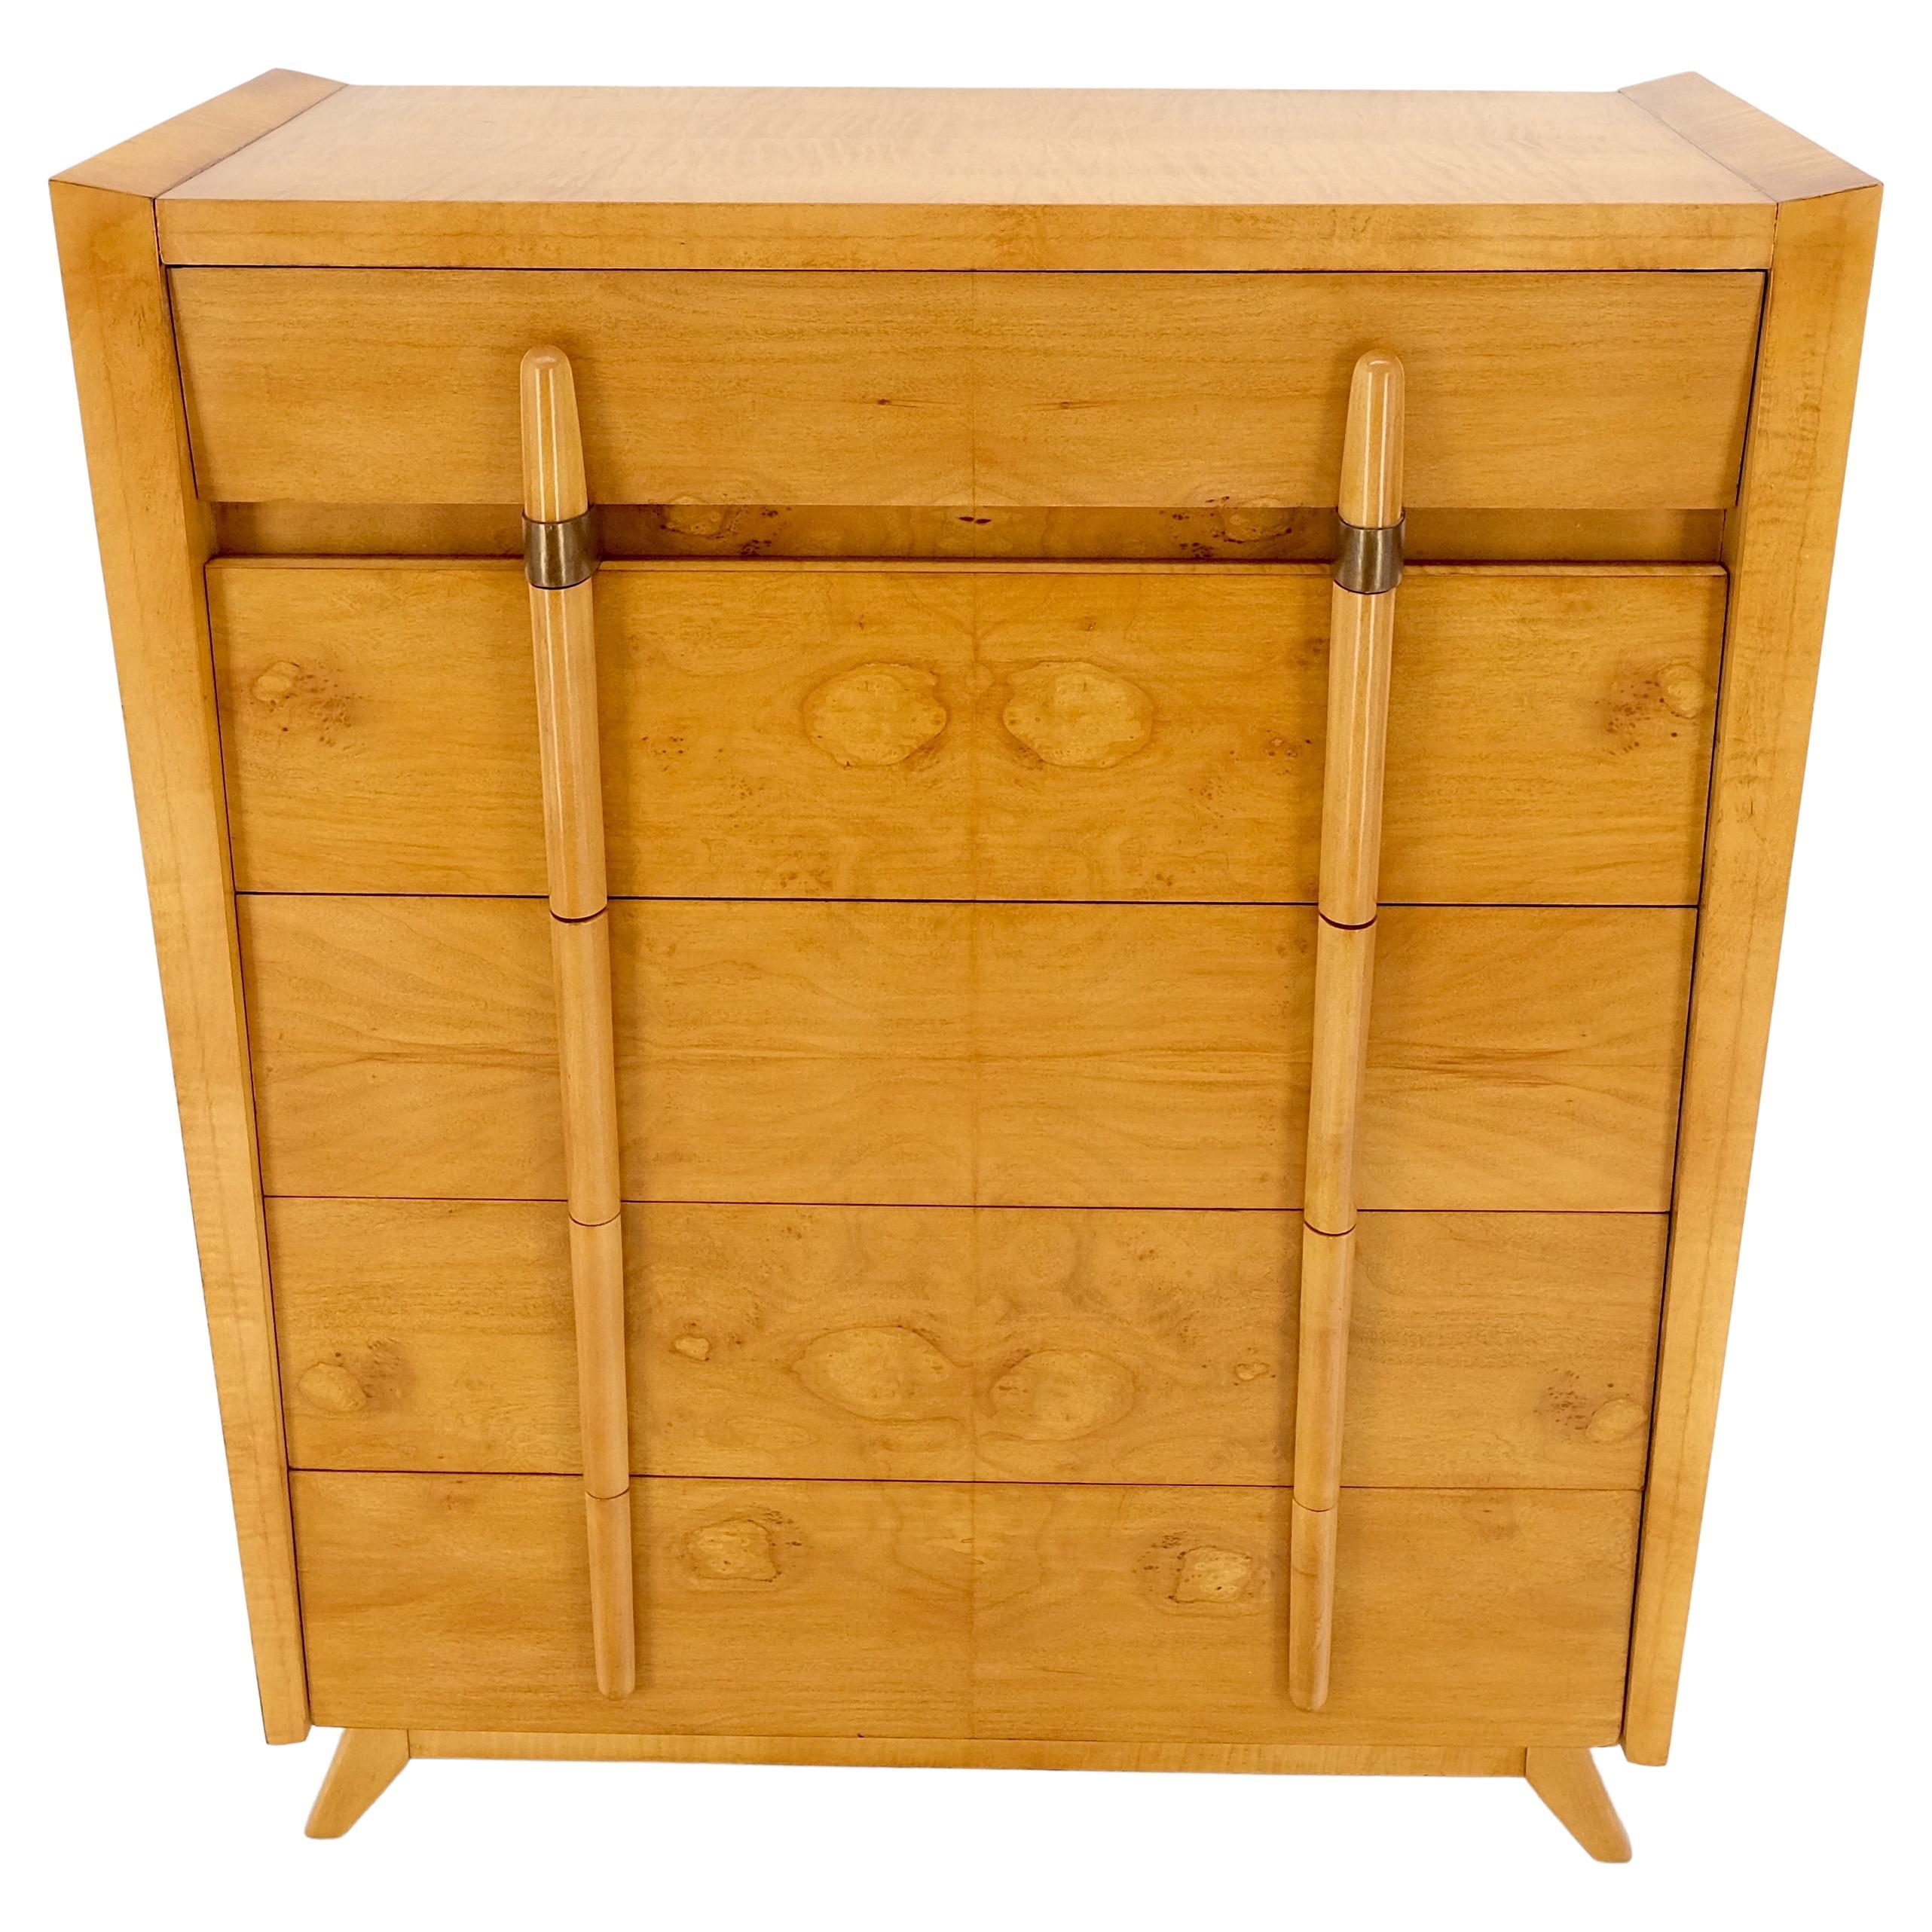 Cedar drawer w/ lid Mid-Century Modern burl high chest dresser sculptured pulls.
Honey-amber tone burl wood grain. Mint condition.